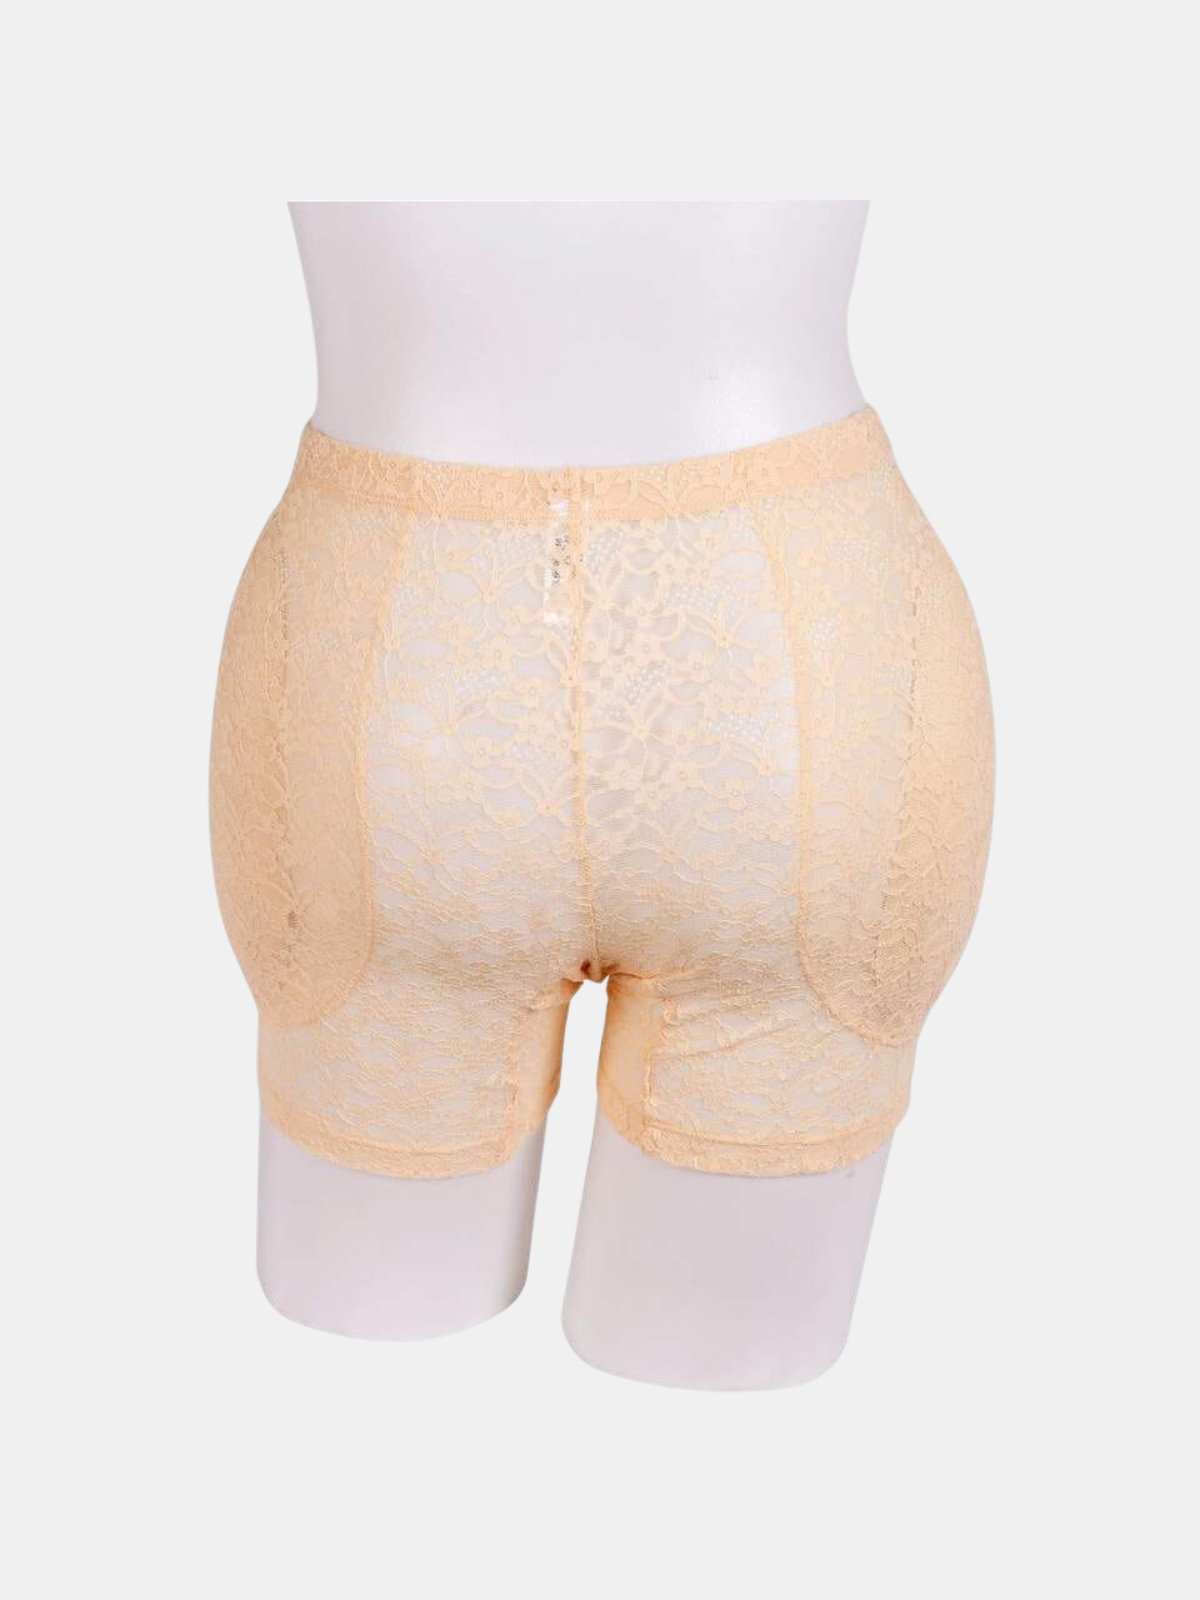 Buy BENCOMM Camel Toe Invisible Gaff Cross Dress Sponge Hip Pads Panties